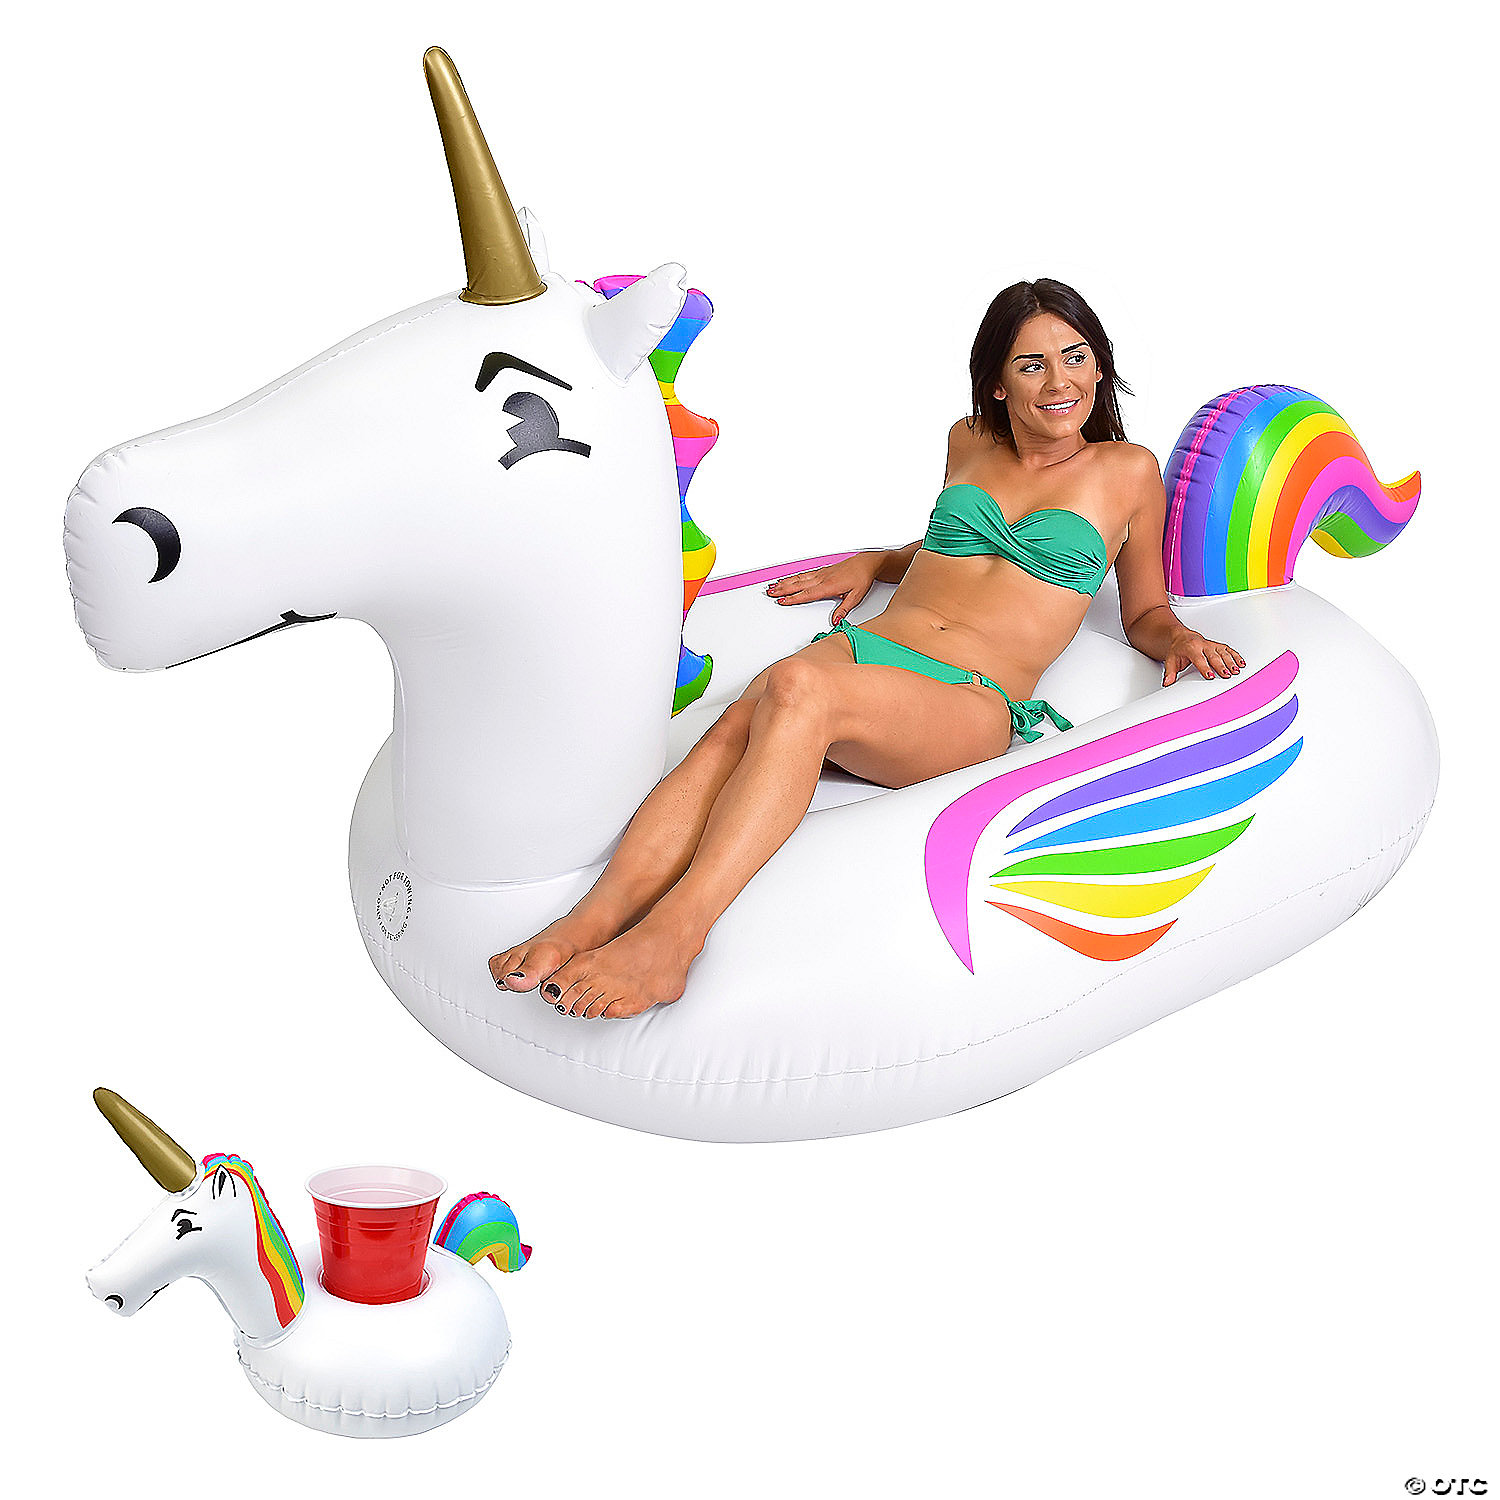 HUGE 75 Inch Rainbow Unicorn Pool Float by Kangaroo 10268 Costumania for sale online 